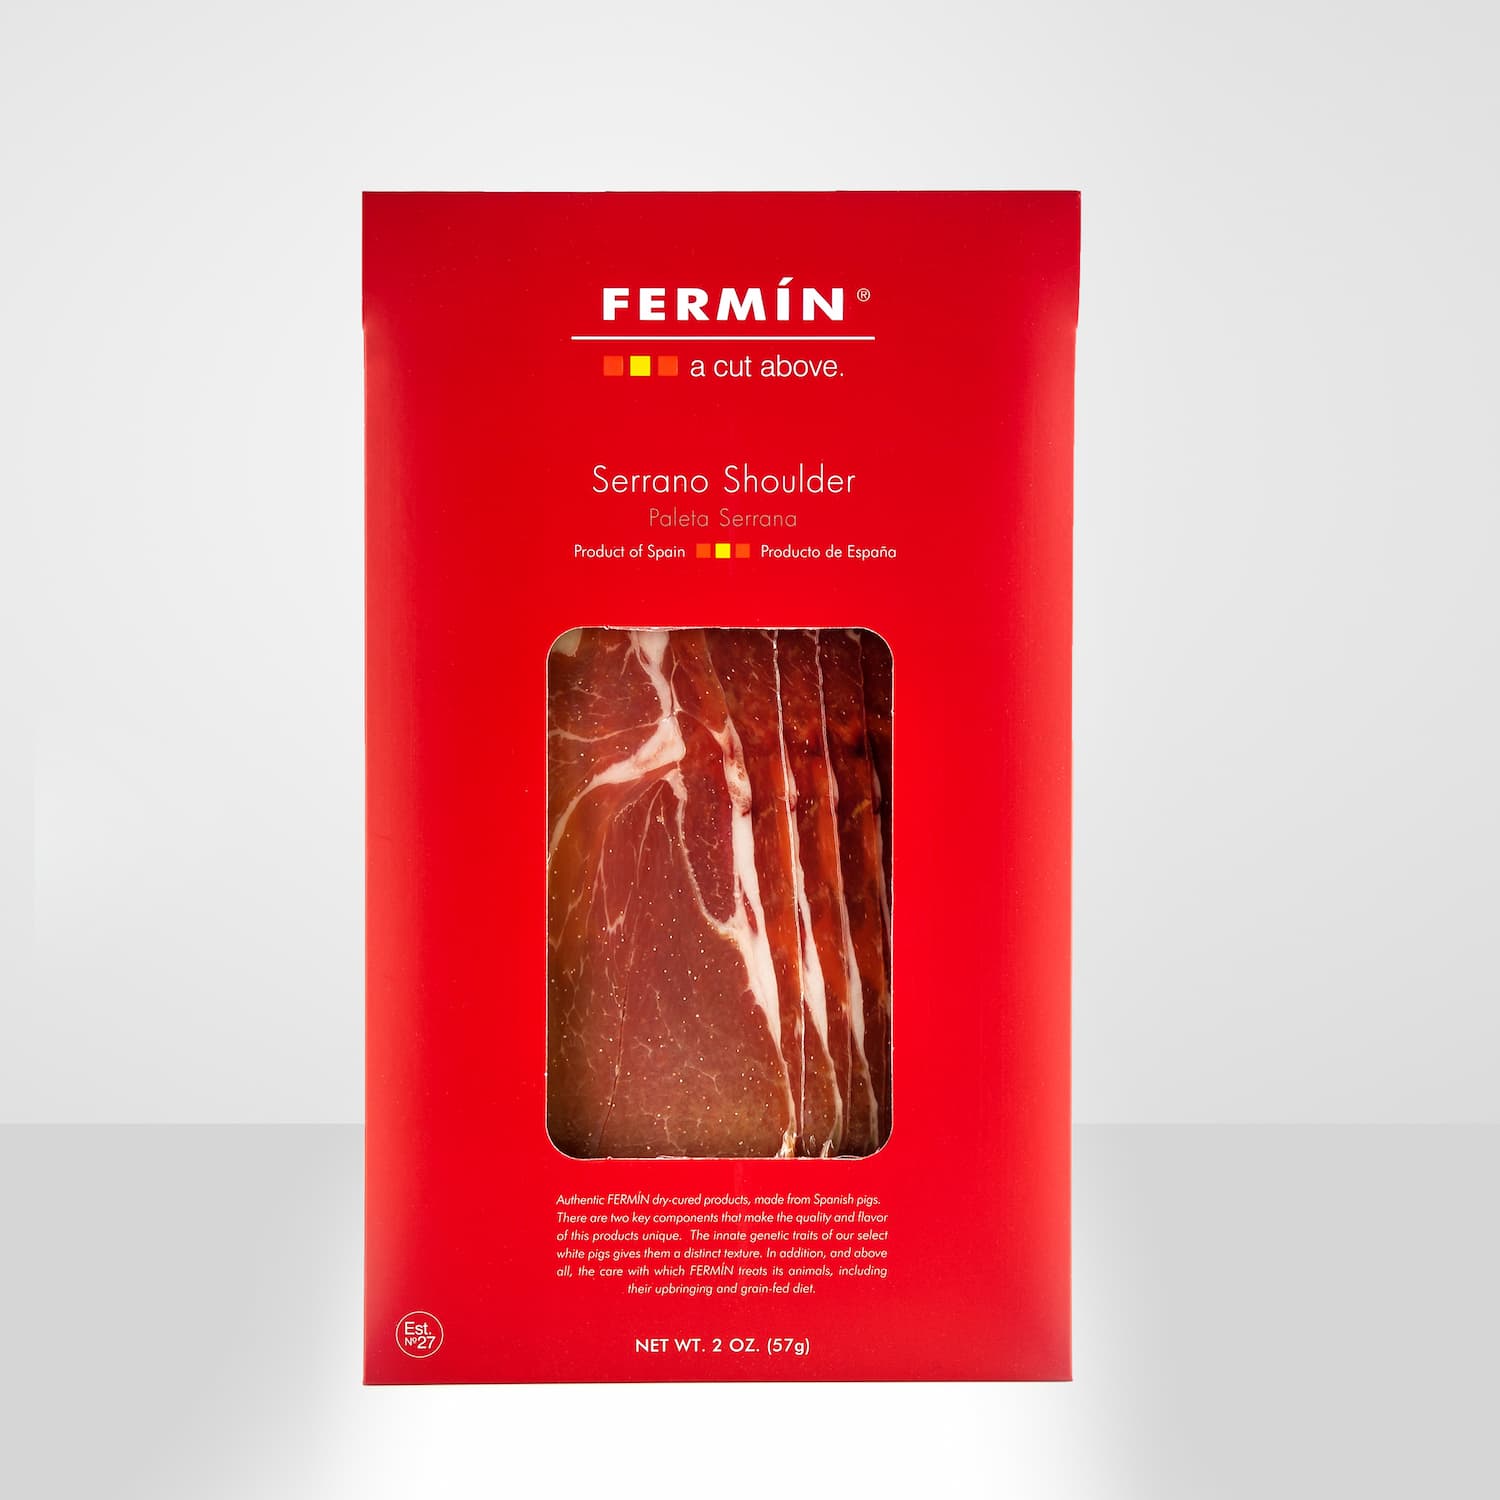 Paleta Serrano, Sliced Ham Meats Fermin